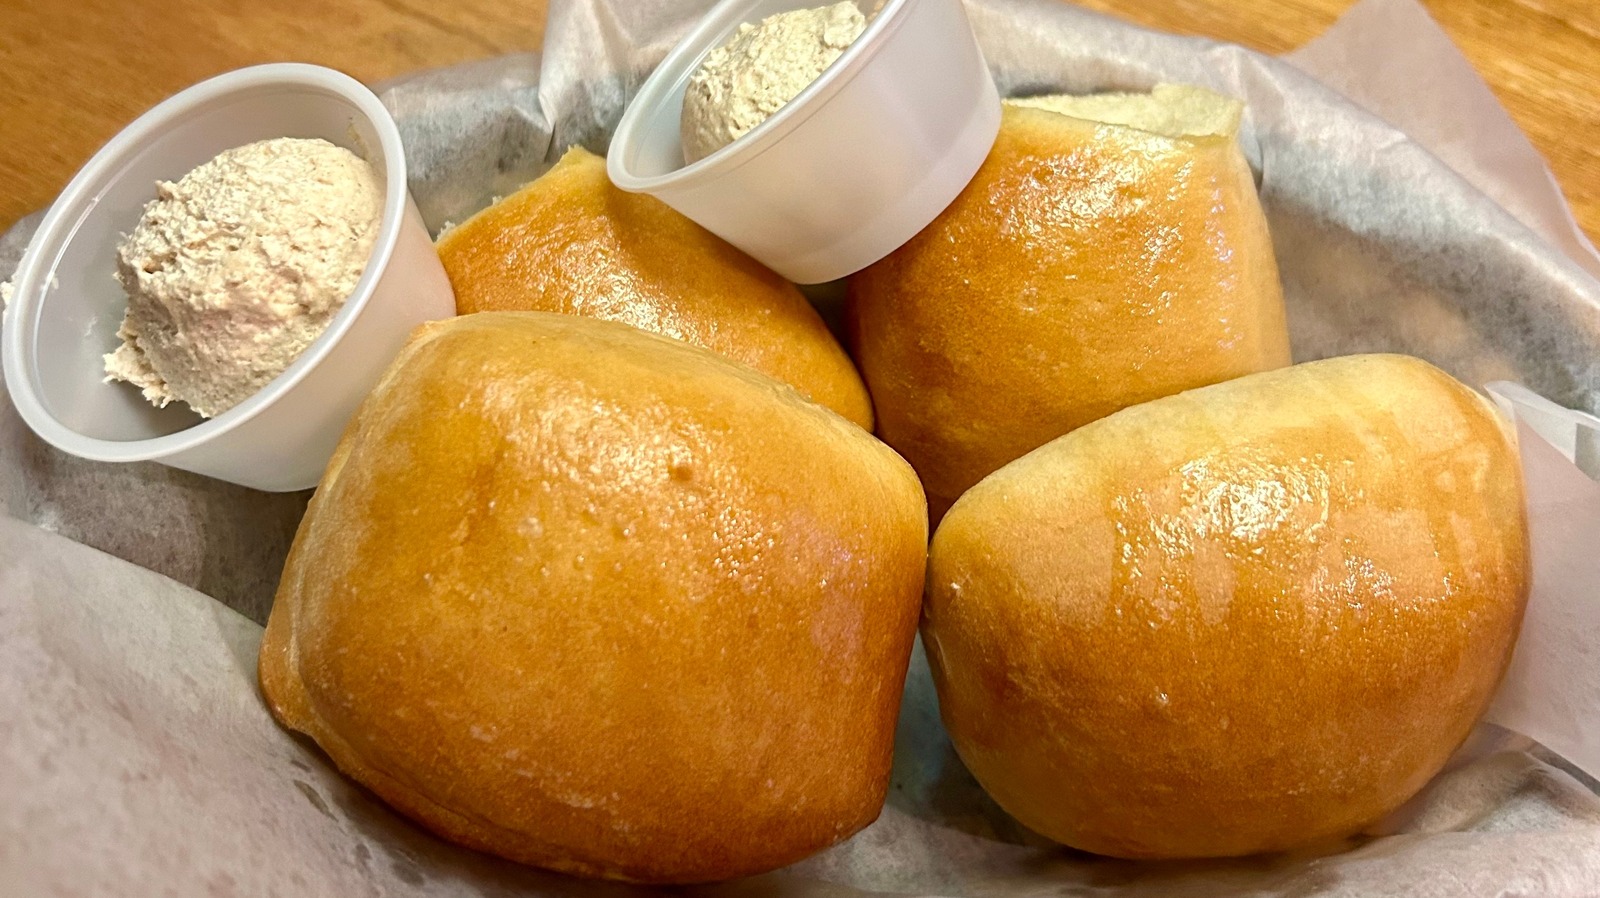 Texas Roadhouse Rolls Out Frozen Bread Rolls at Walmart